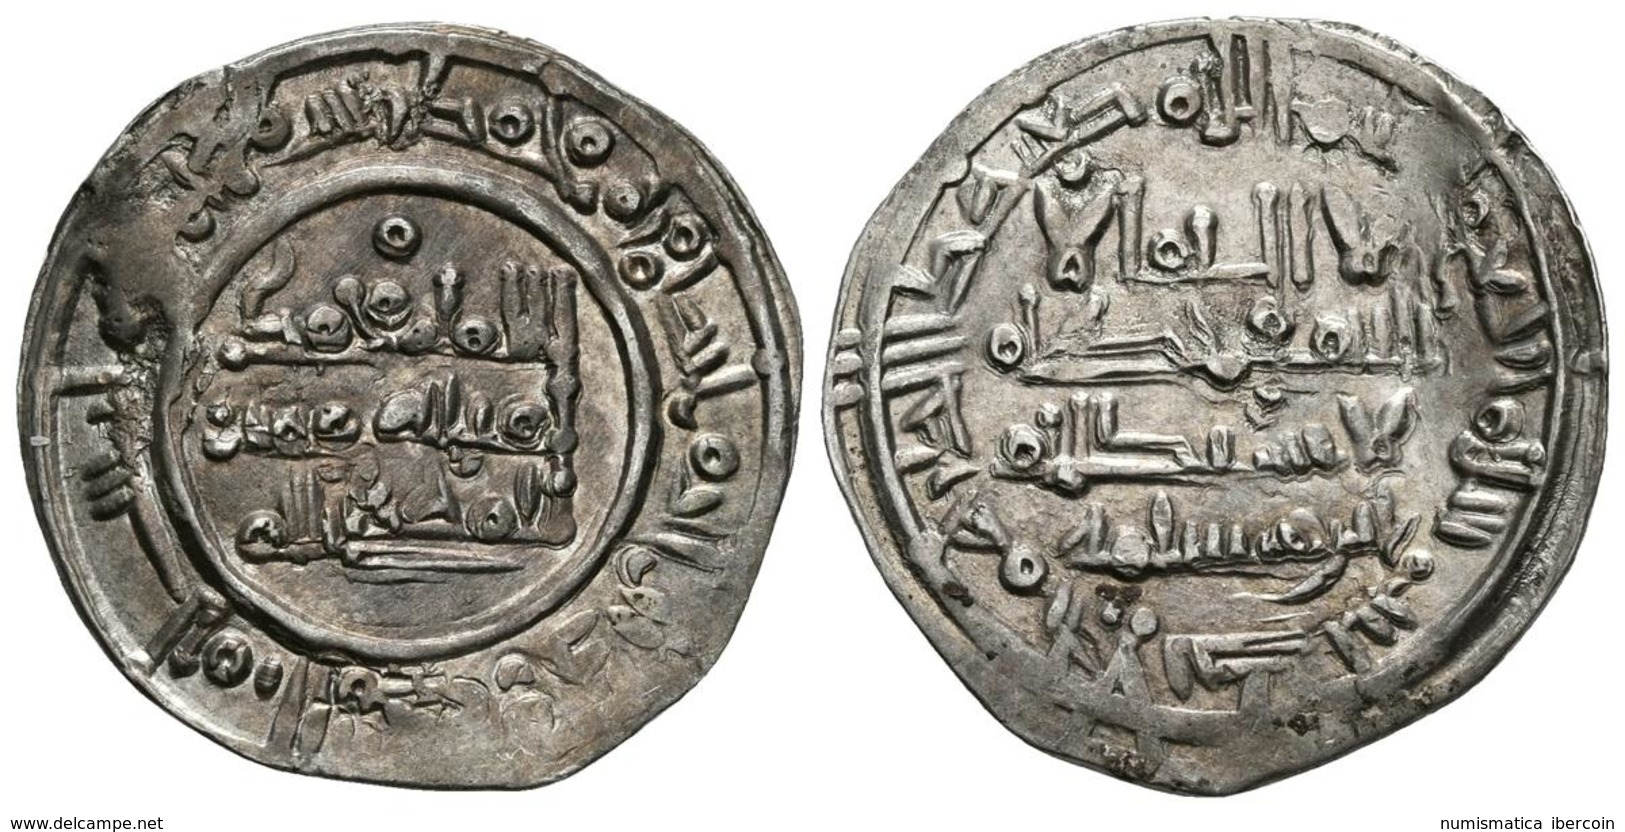 CALIFATO DE CORDOBA. Muhammad II. Dirham. 400H. Al-Andalus. V-688; Prieto 4. Ar. 3,68g. Bonita Pátina. EBC-. - Islamic